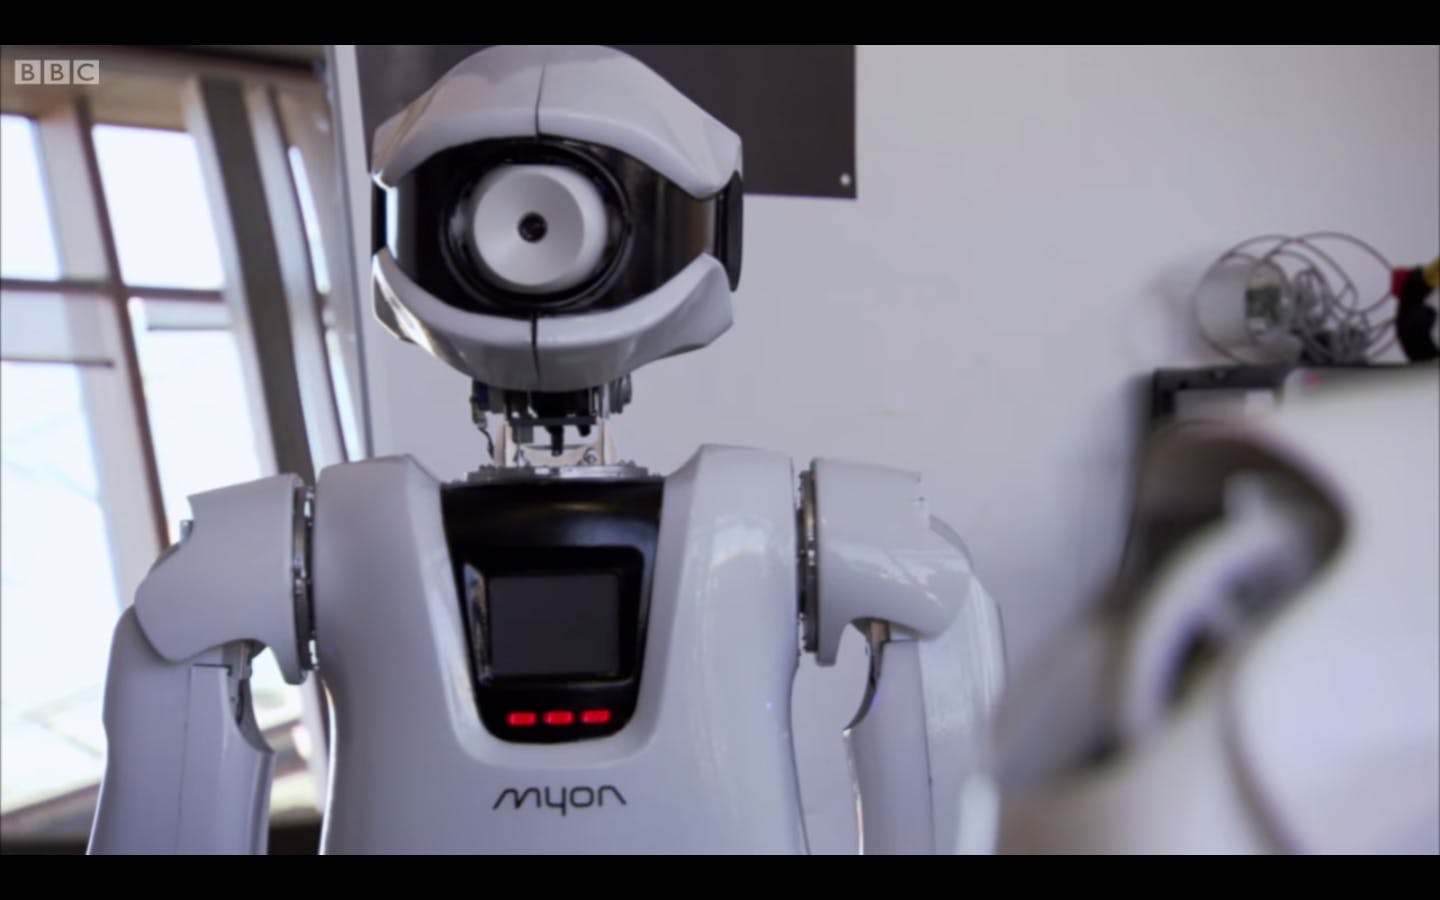 One of Dr. Steels' modular humanoid Myon robots.